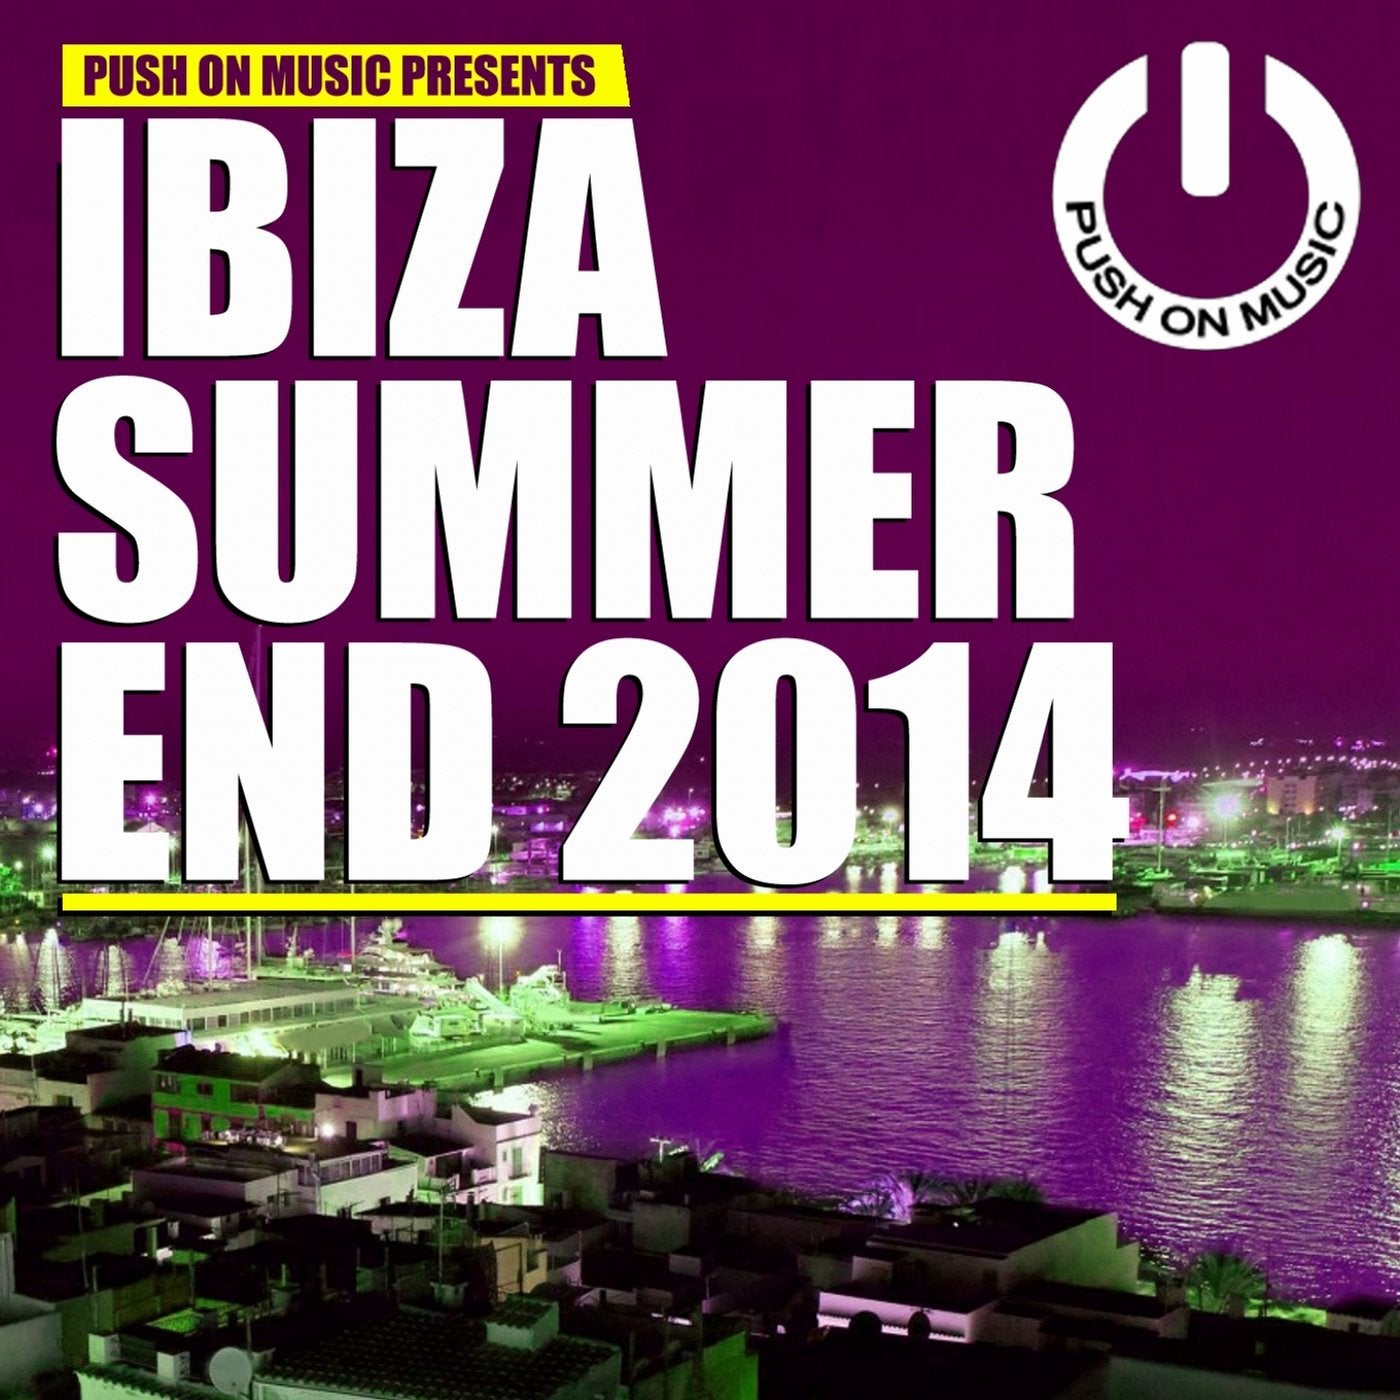 Push on Music Presents Ibiza Summer End 2014